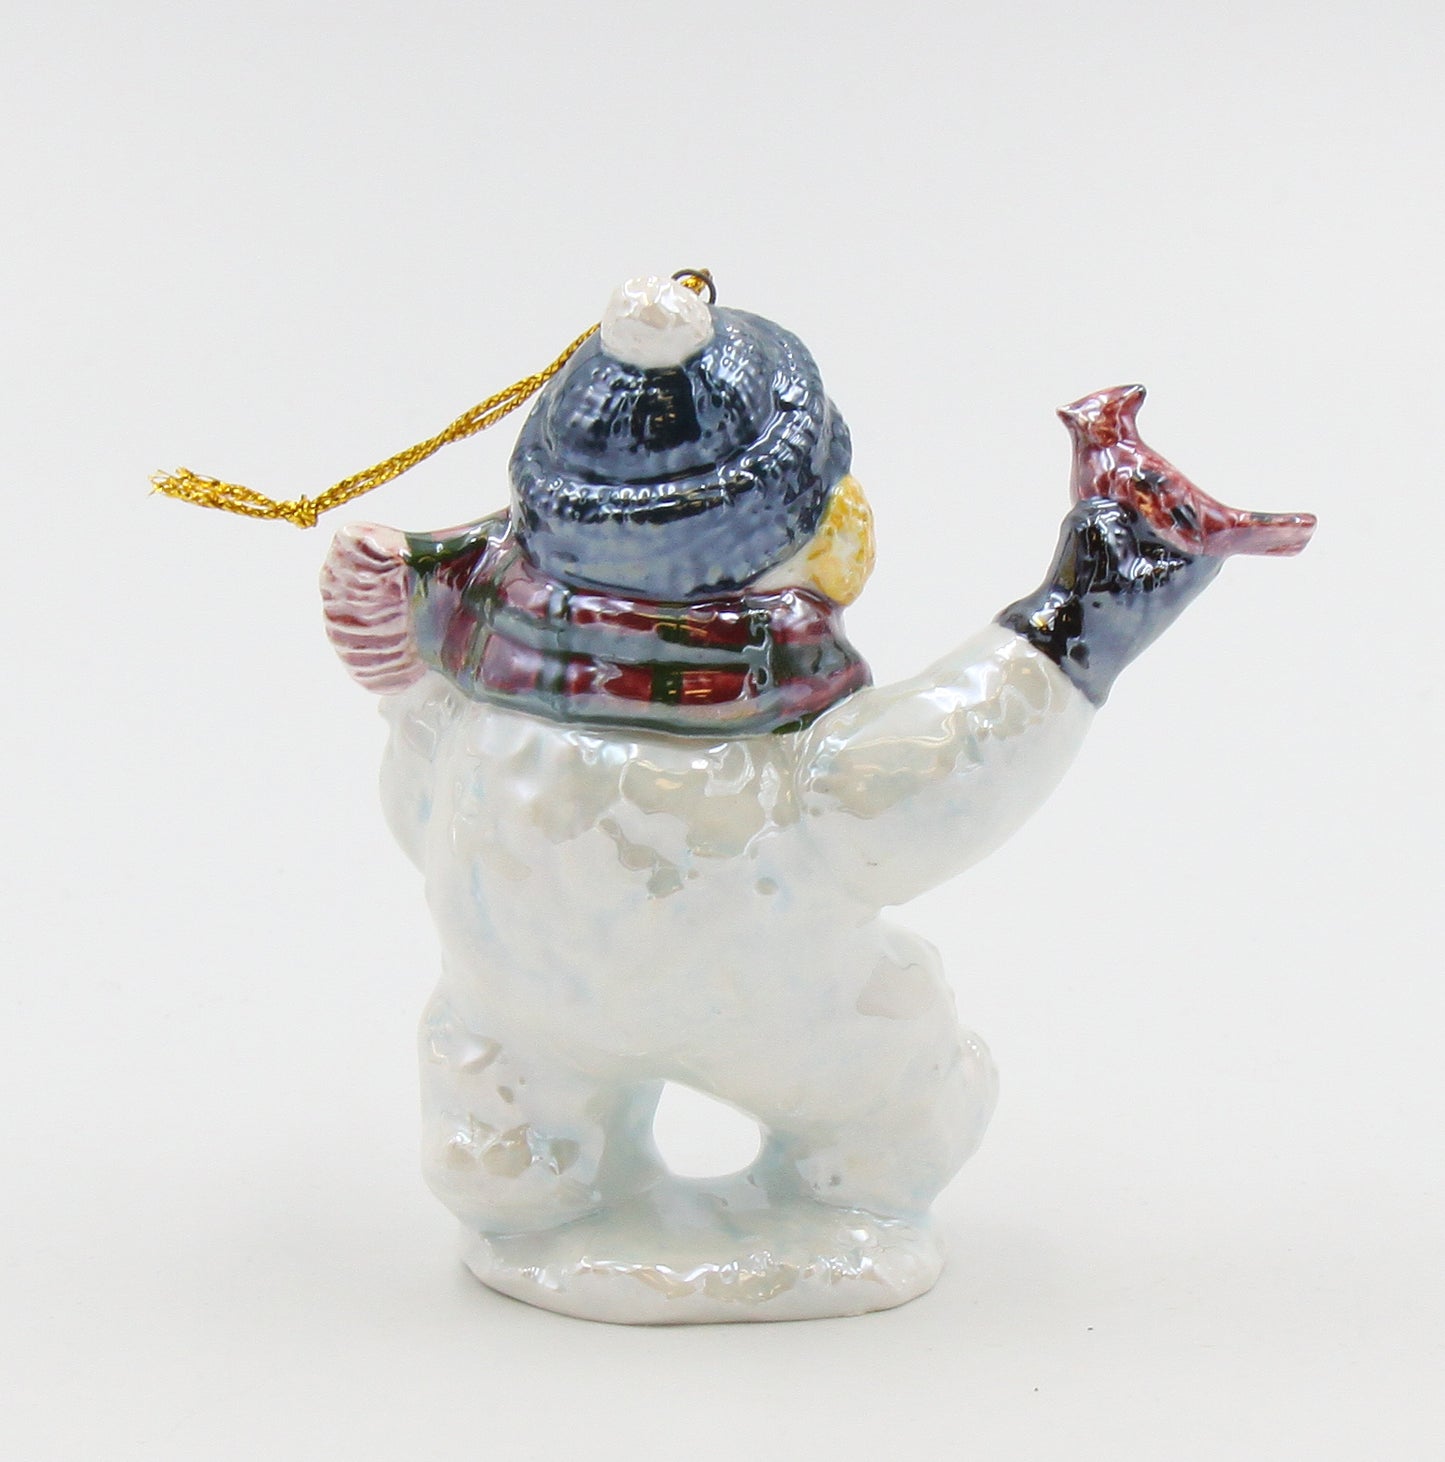 Ceramic Snowman with Bird and Birdhouse Ornament, Home Décor, Gift for Her, Mom, Christmas tree Décor